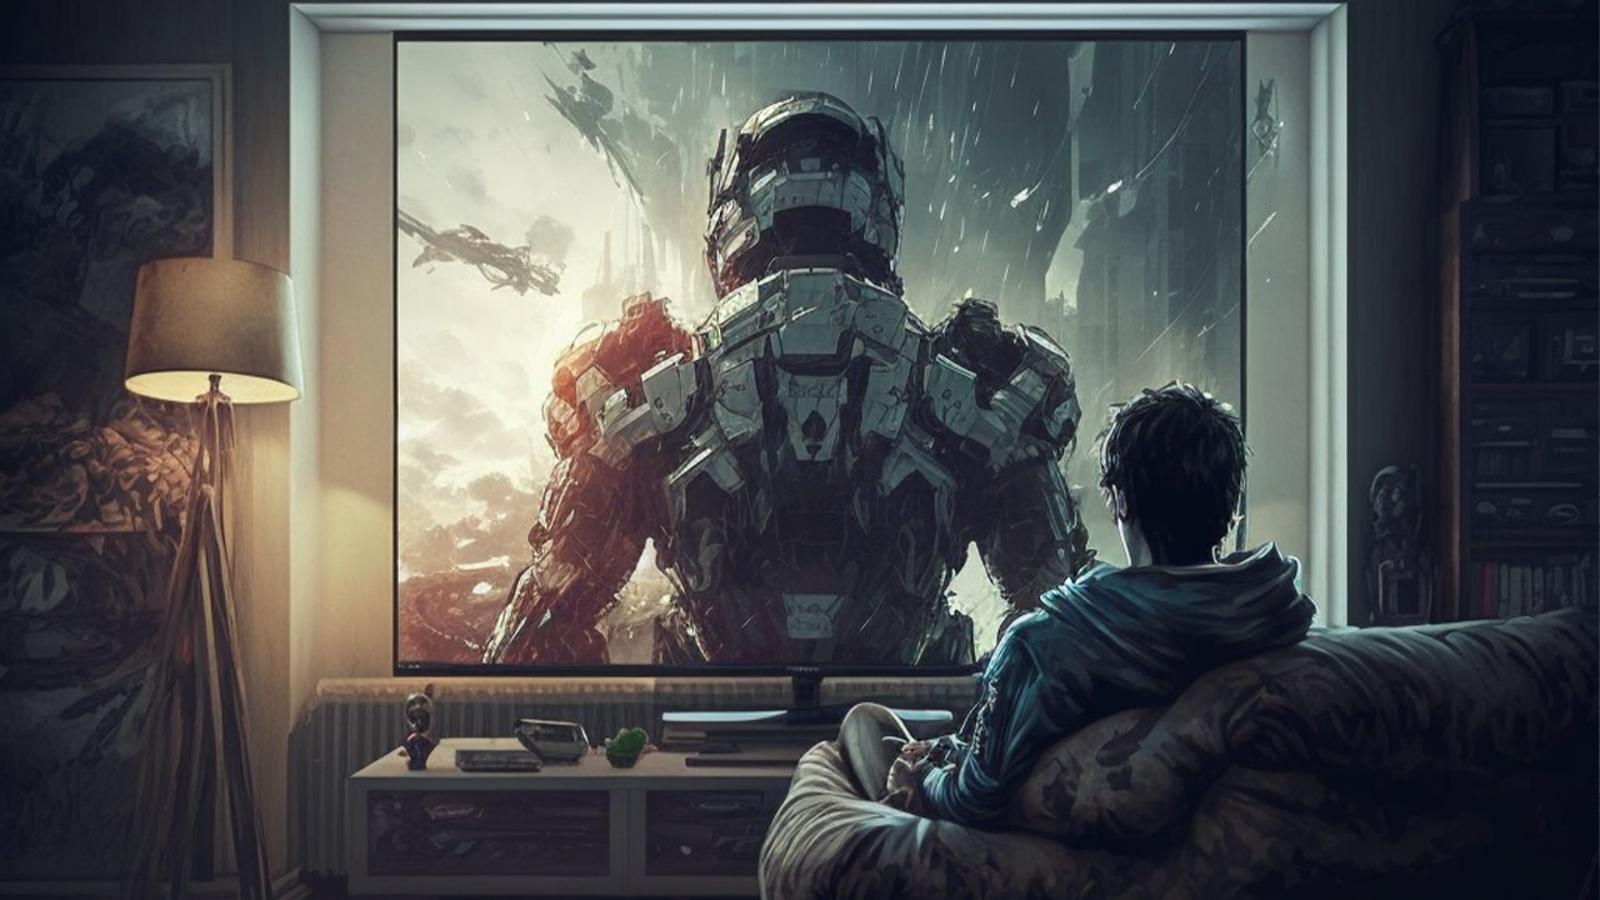  Filmes de Attack on Titan estreiam na HBO Max